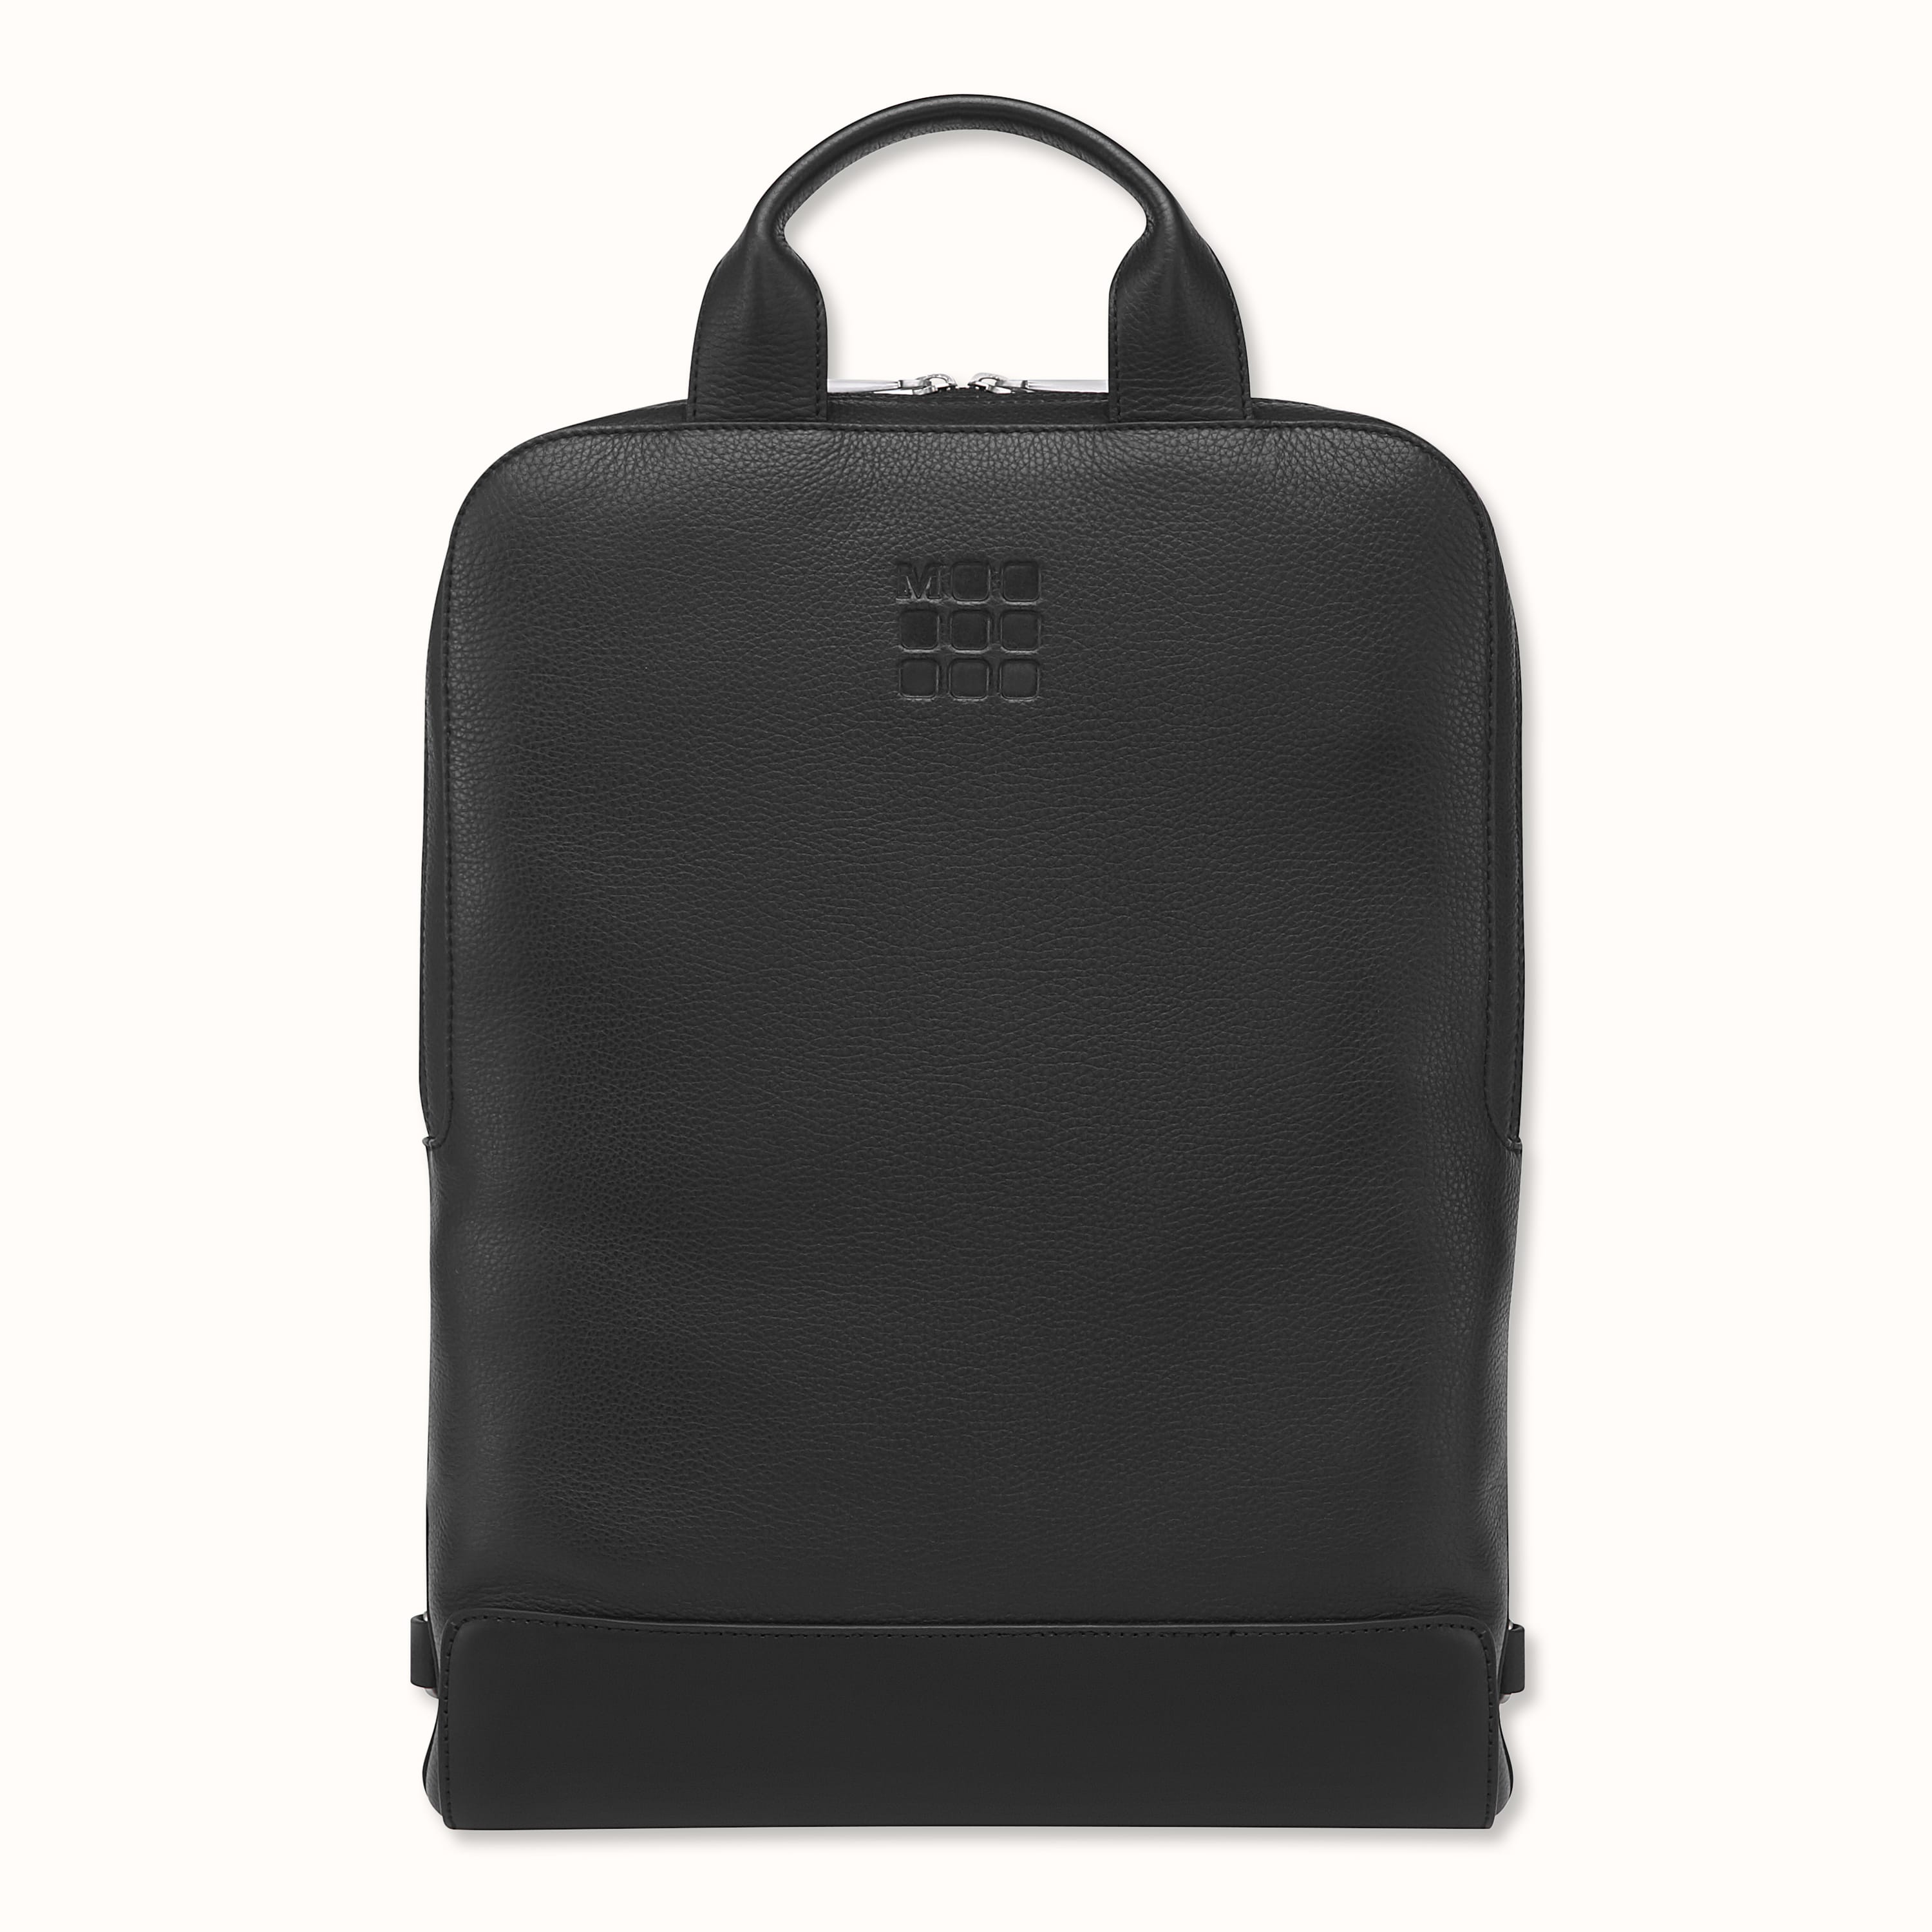 Bogg Bags Bogg Canvas Backpack - I Olive You $ 134.95 | TYLER'S